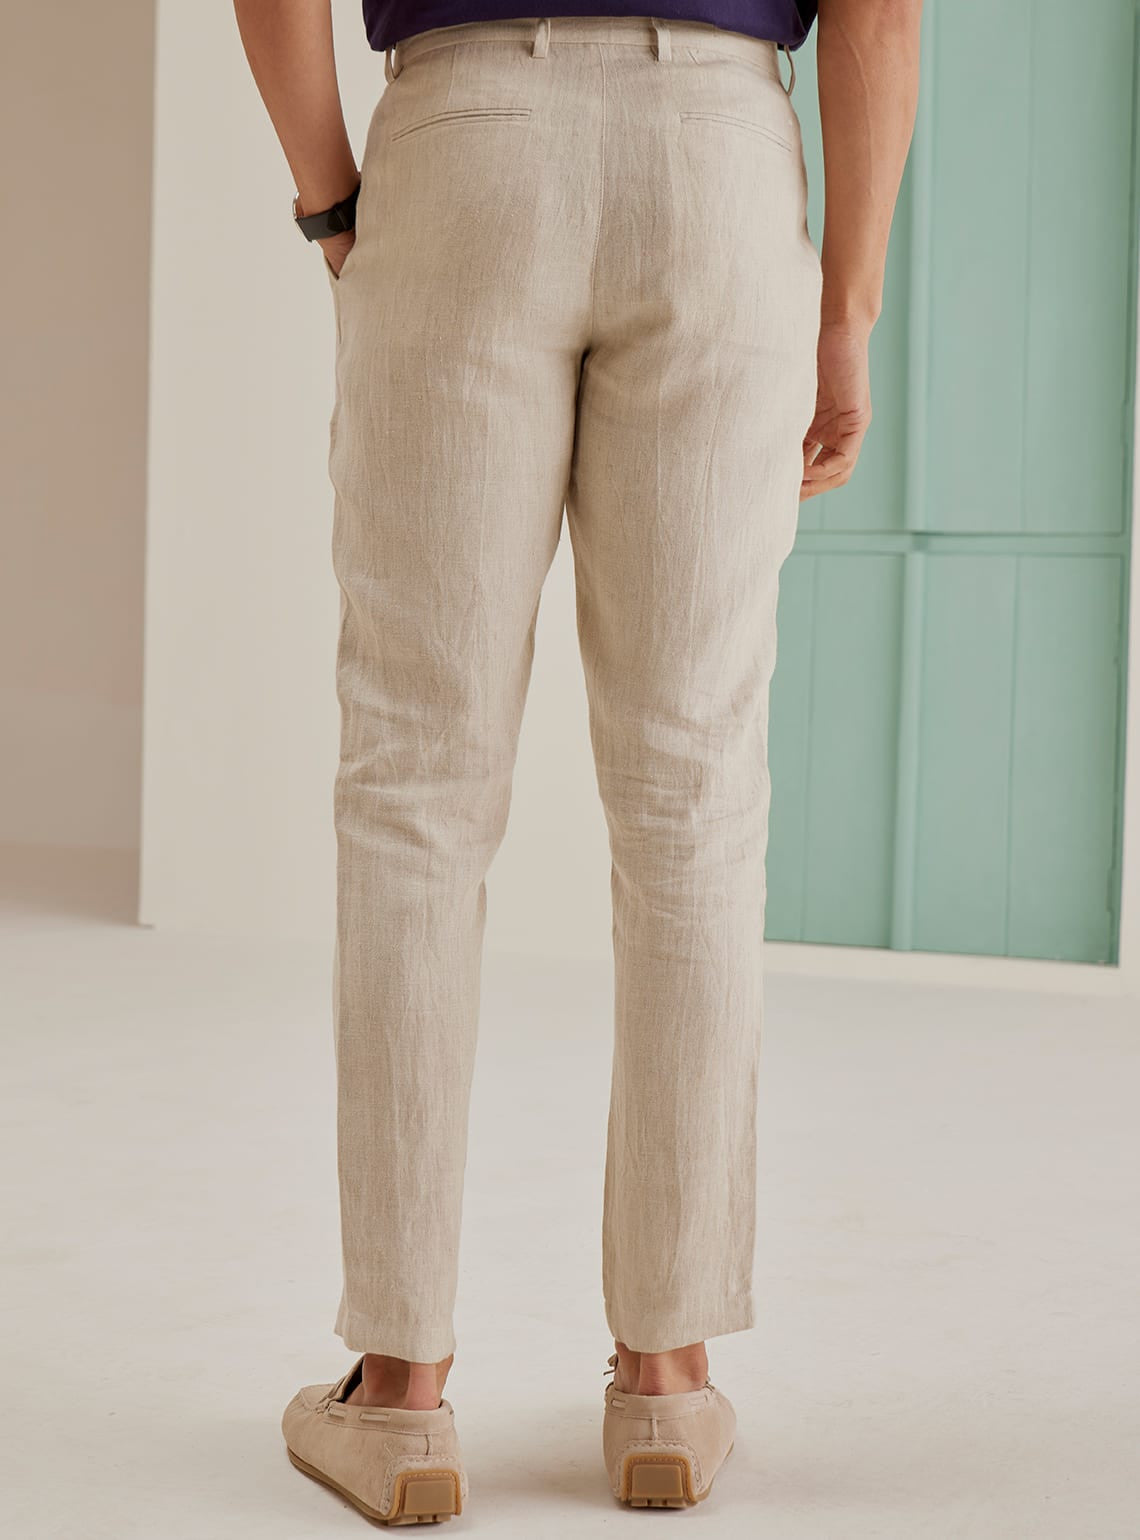 Khaki Linen Pants